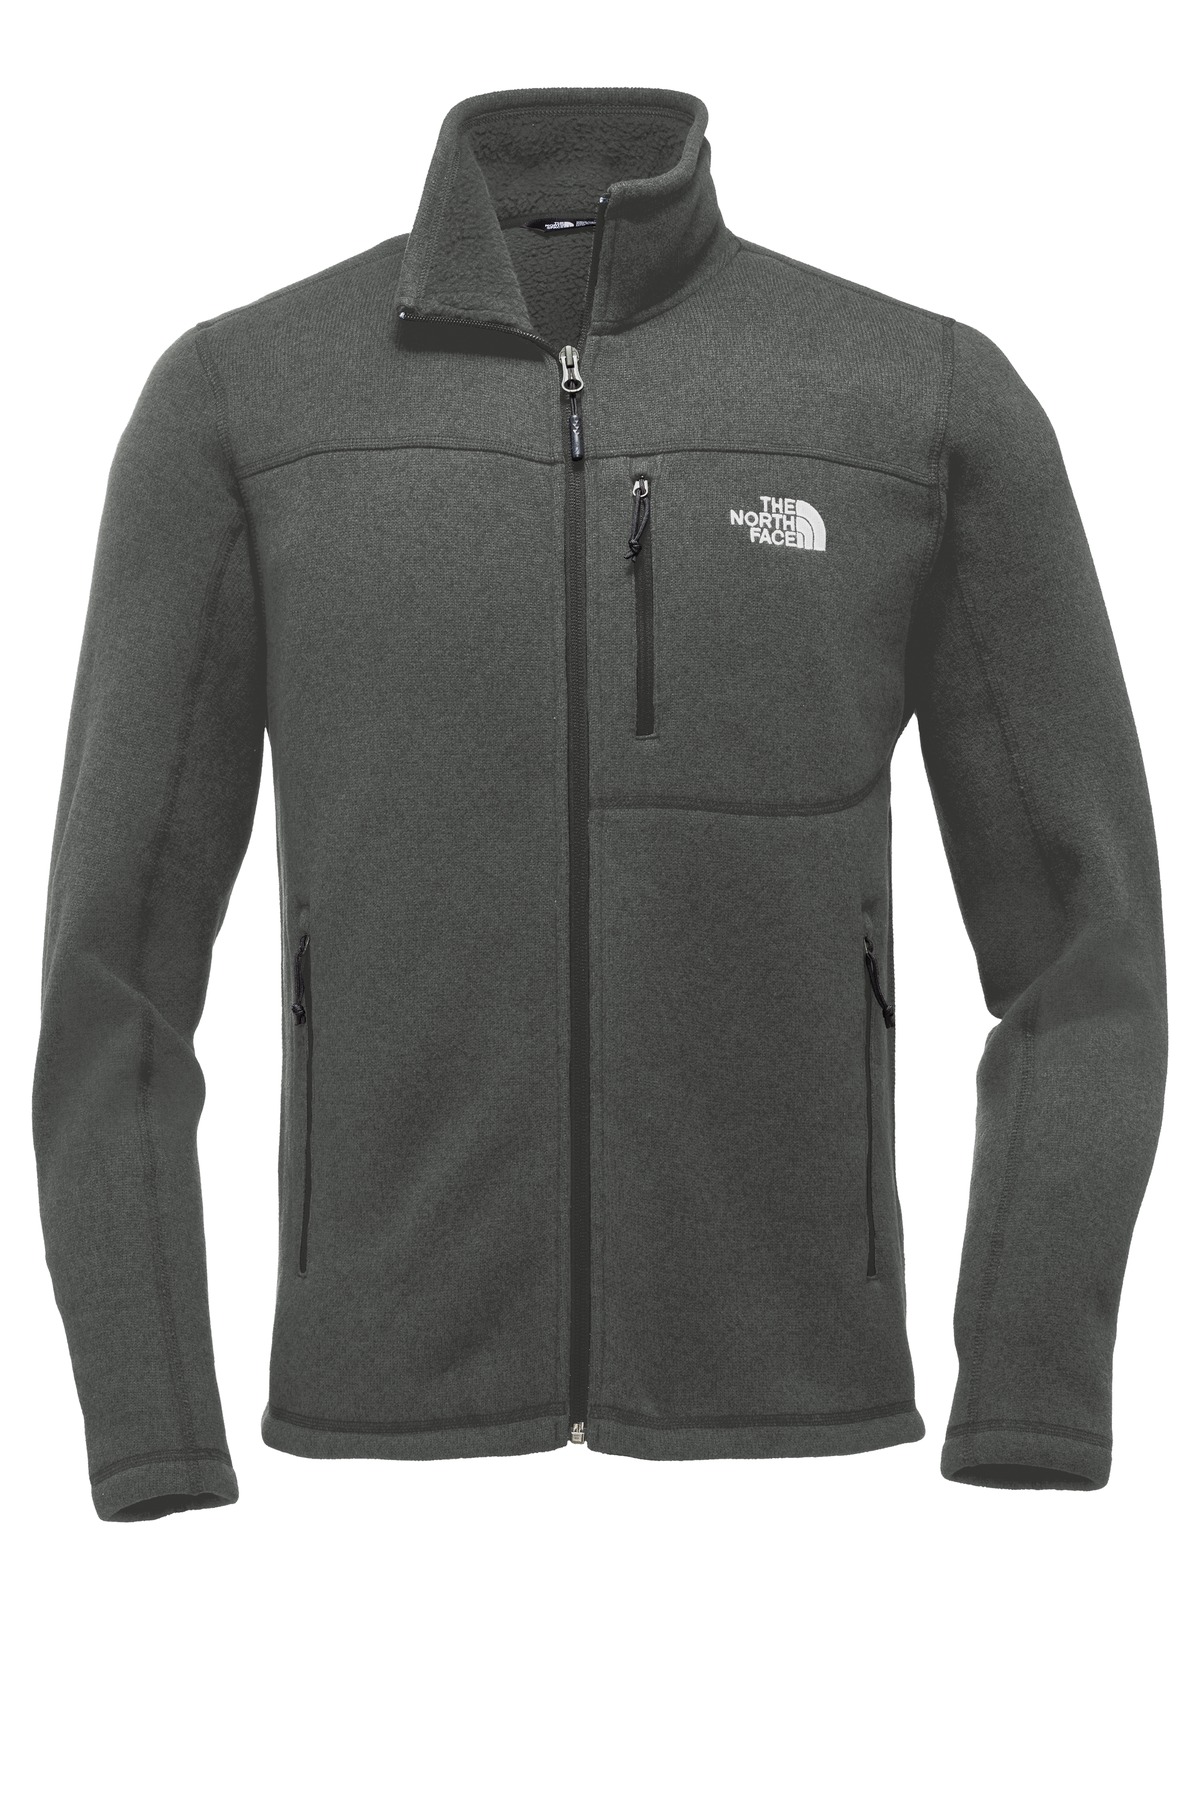 The North Face ® Sweater Fleece Jacket. NF0A3LH7 - Custom Shirt Shop